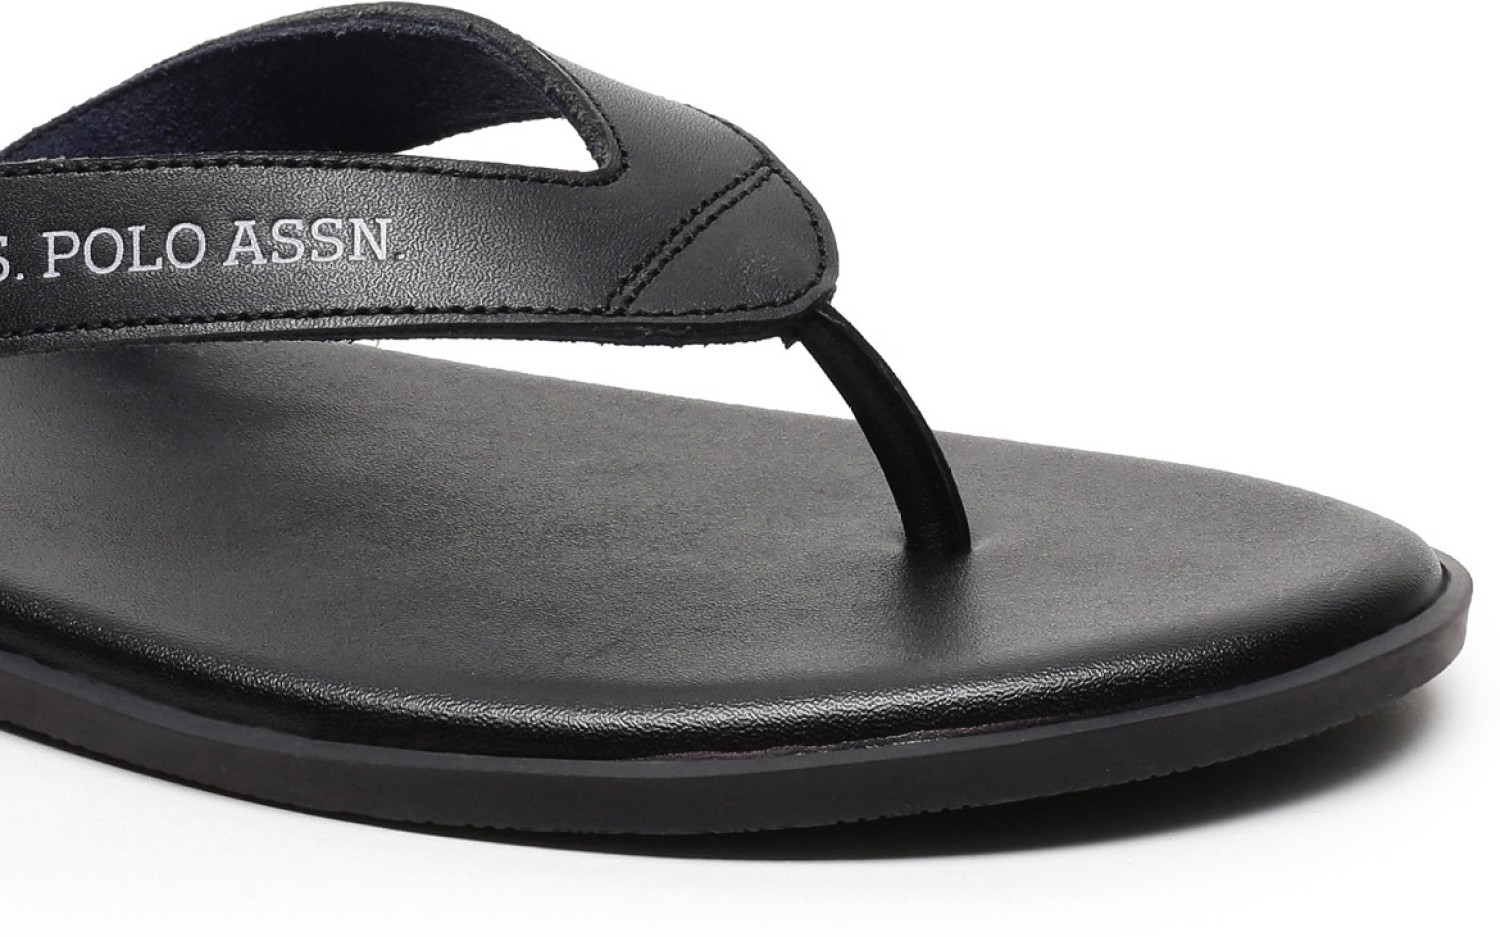 U.S. POLO ASSN. Flip Flops - Buy U.S. POLO ASSN. Flip Flops Online at Best  Price - Shop Online for Footwears in India | Flipkart.com